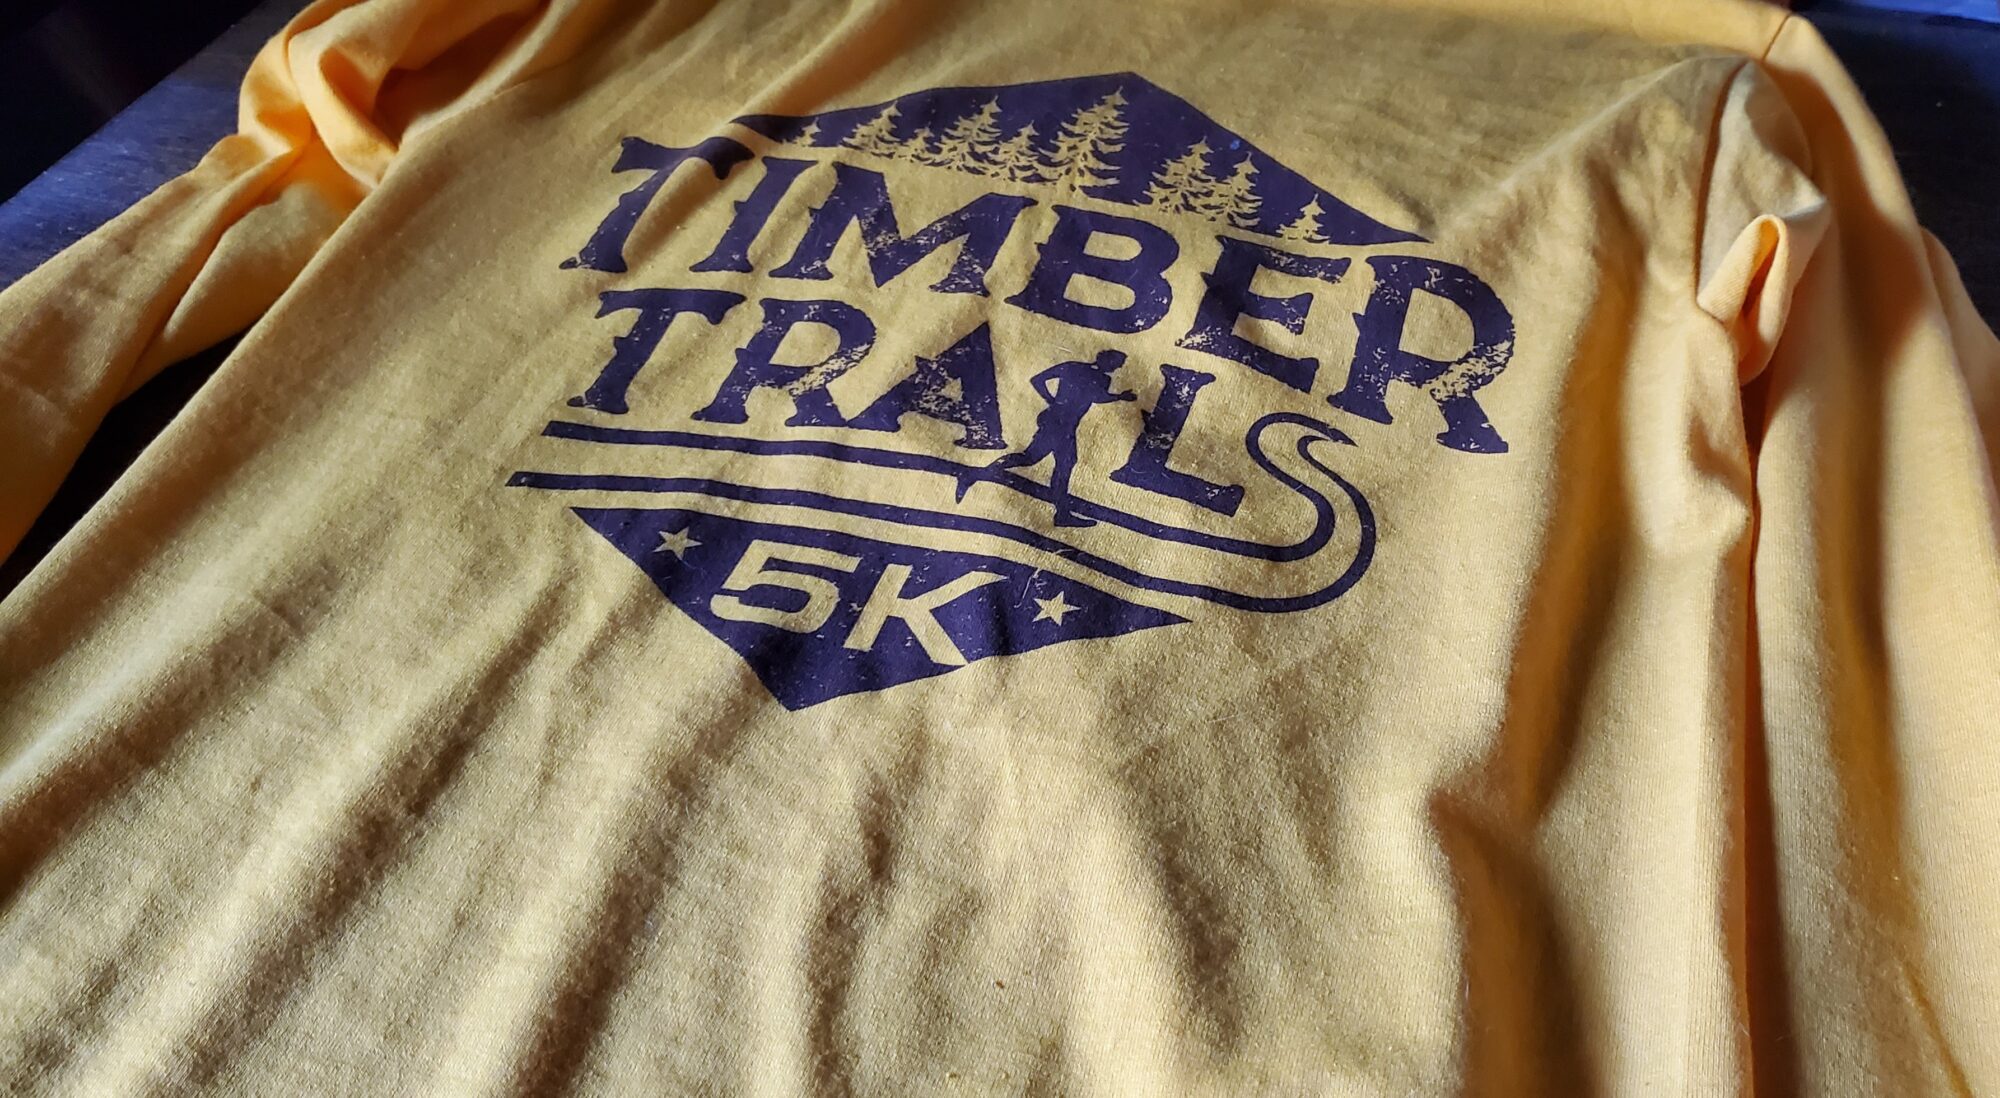 Timber Trails 5K Long sleeve shirt